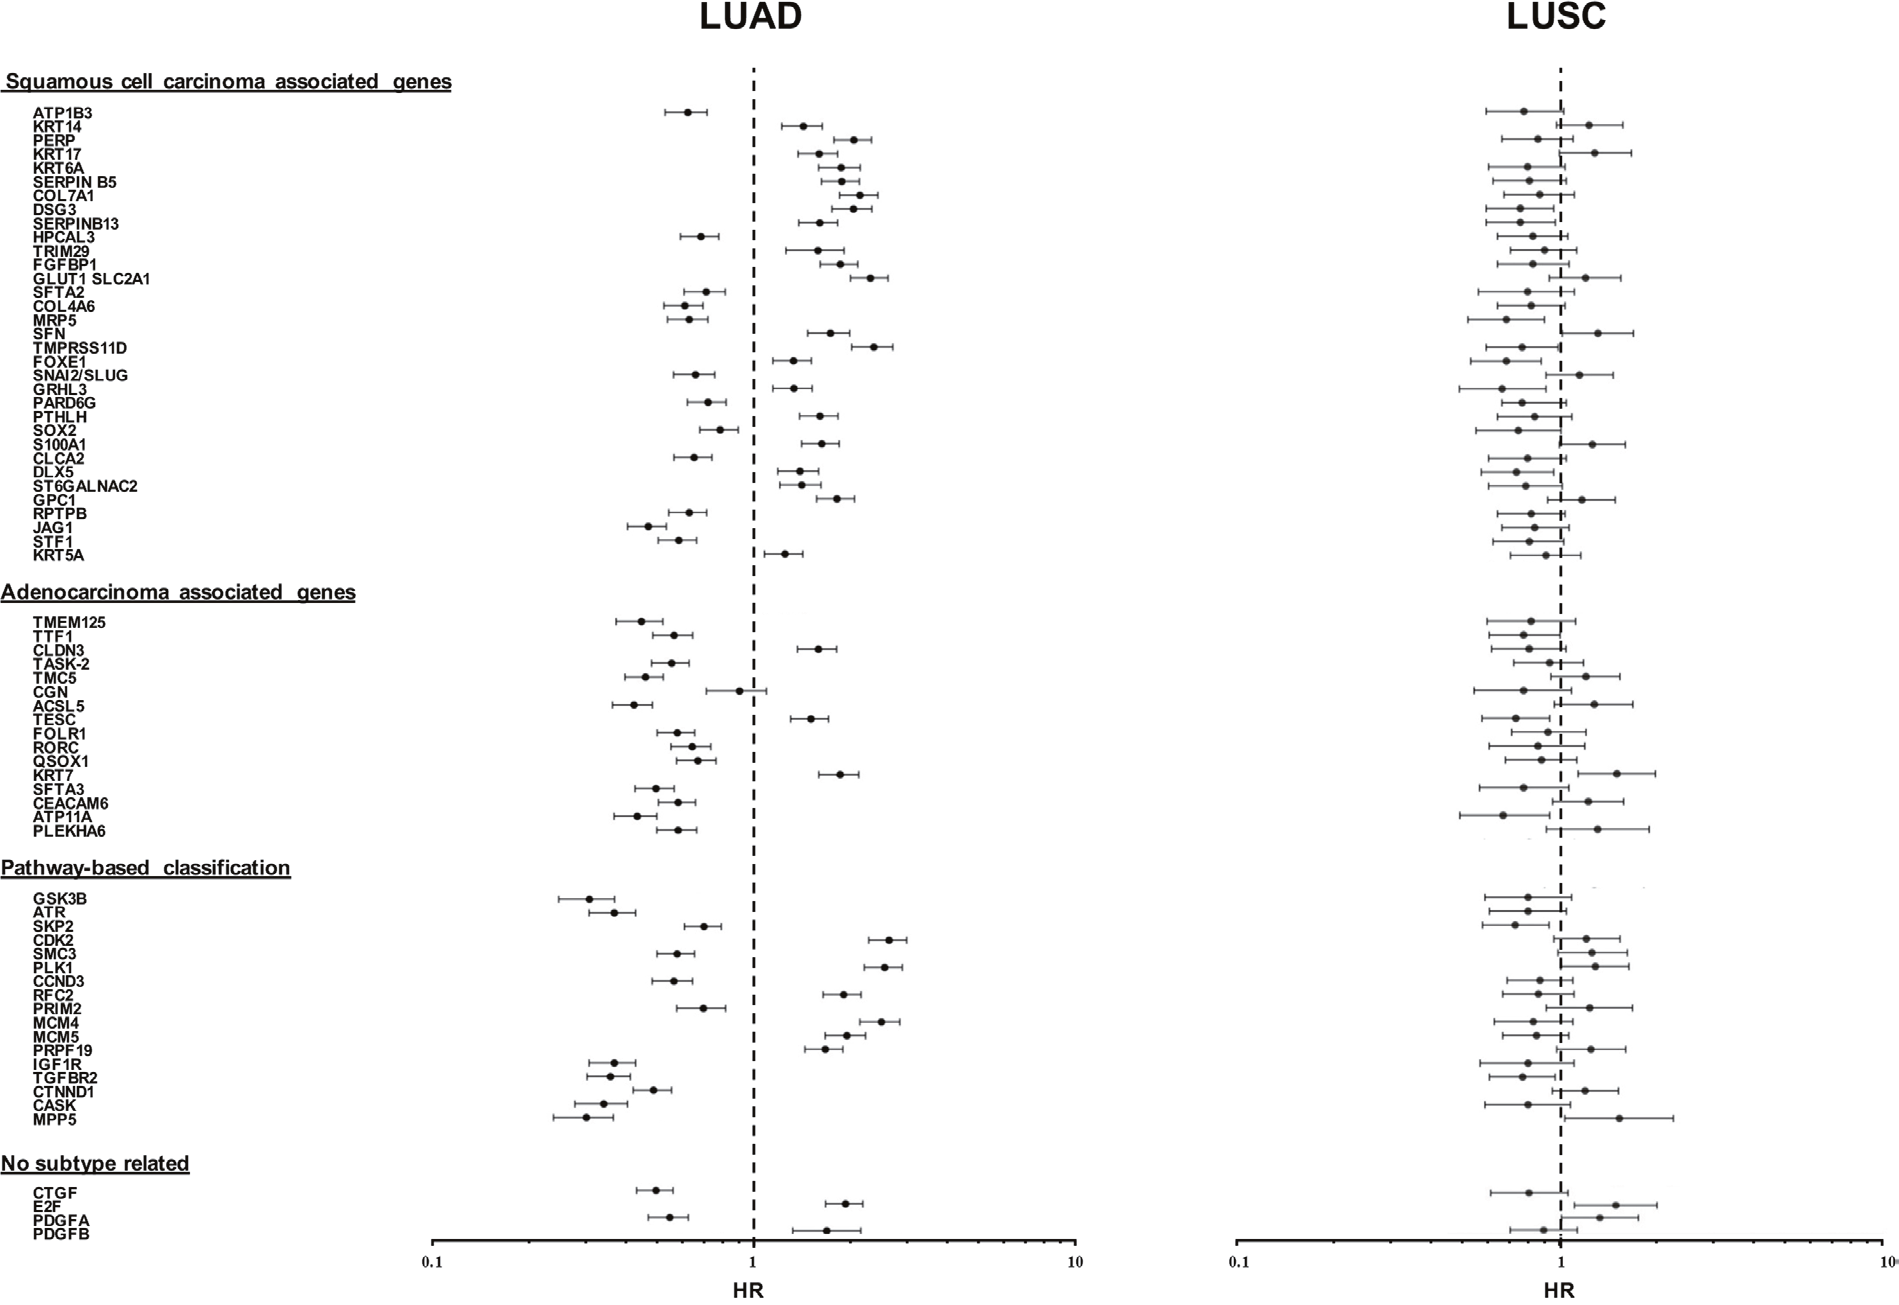 Distribution of disease-outcome values for prognostic LUAD versus LUSC determinants.